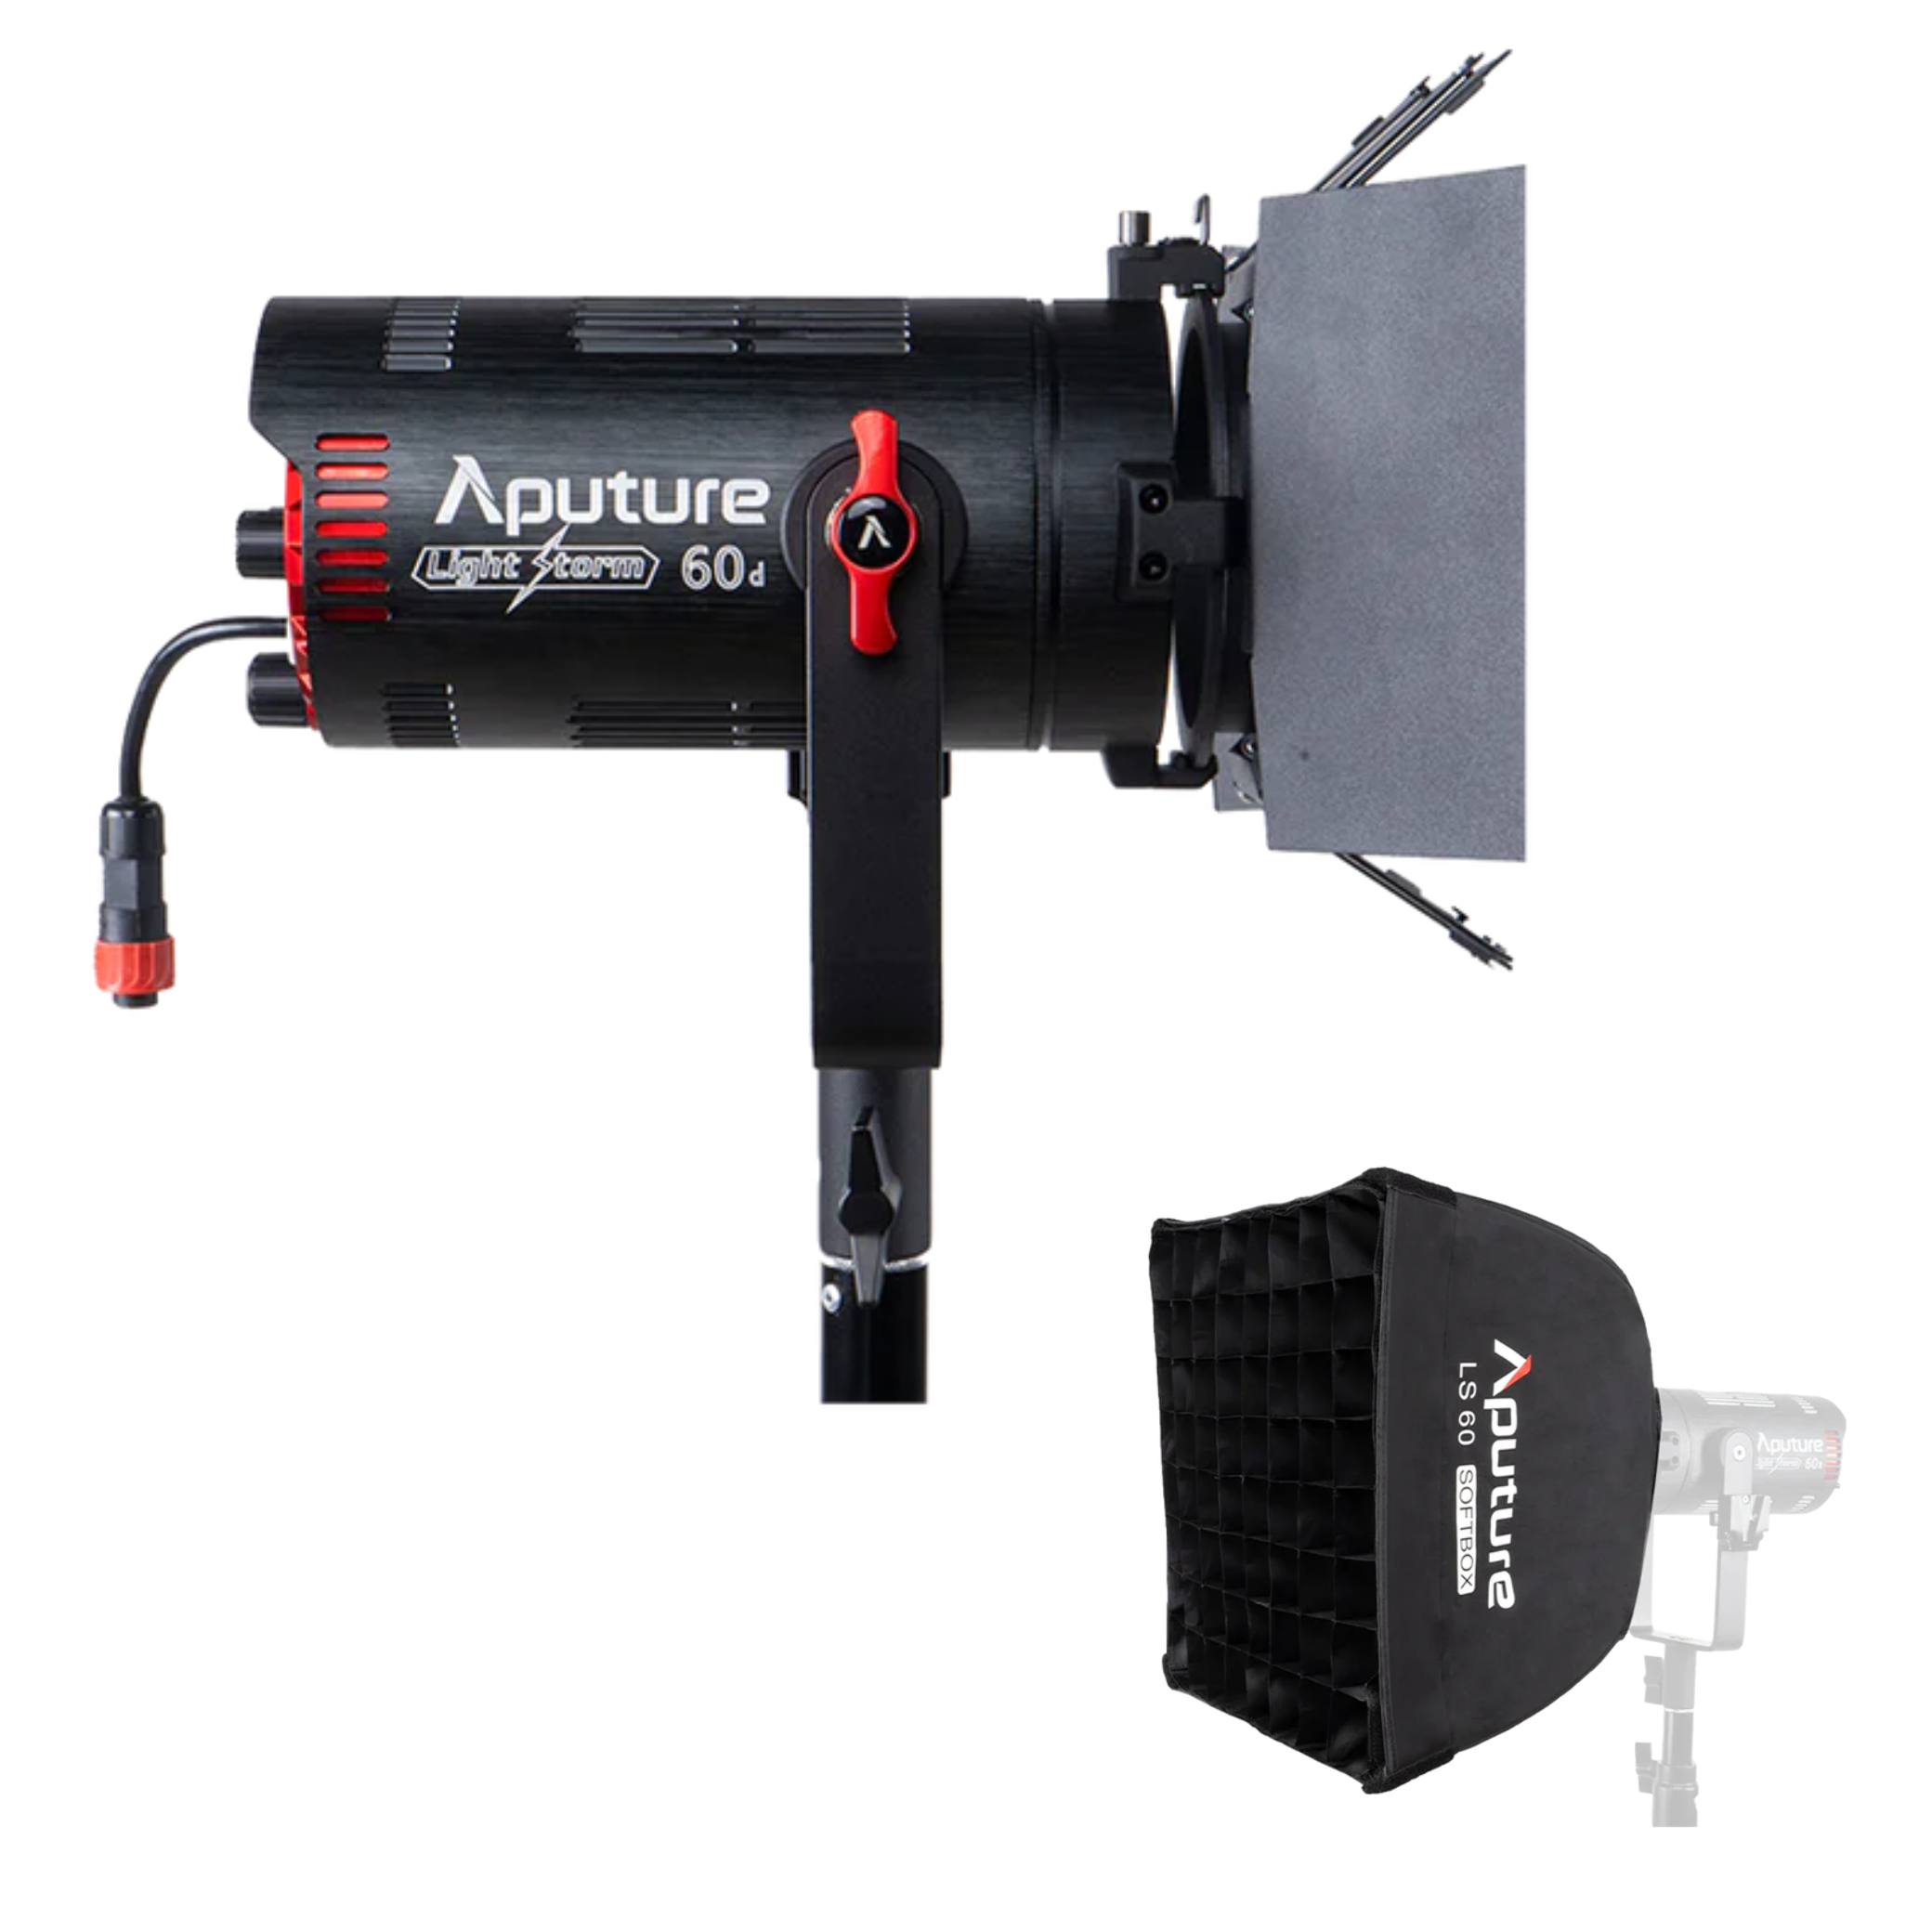 Aputure LS 60d 60W Daylight Focusing LED Video Light